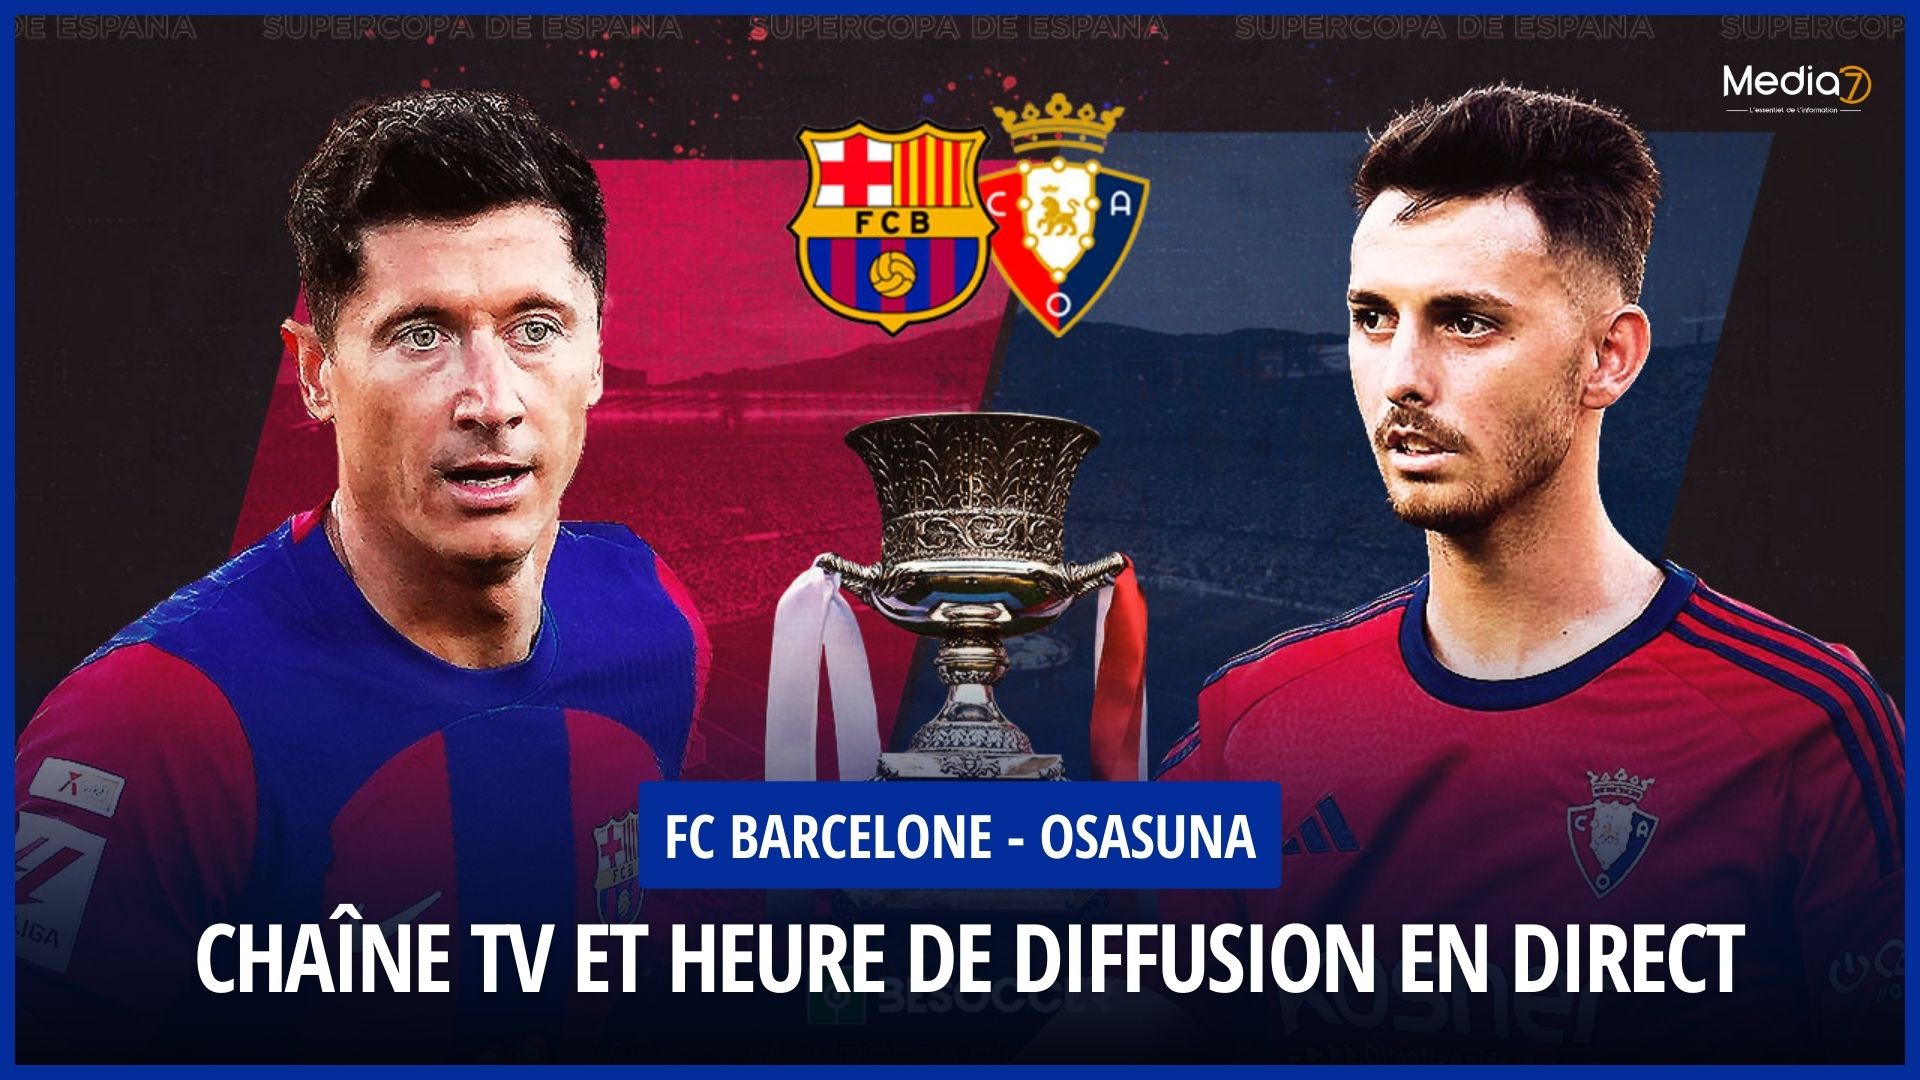 FC Barcelona - Osasuna Match Live: TV Channel and Broadcast Schedule - Media7